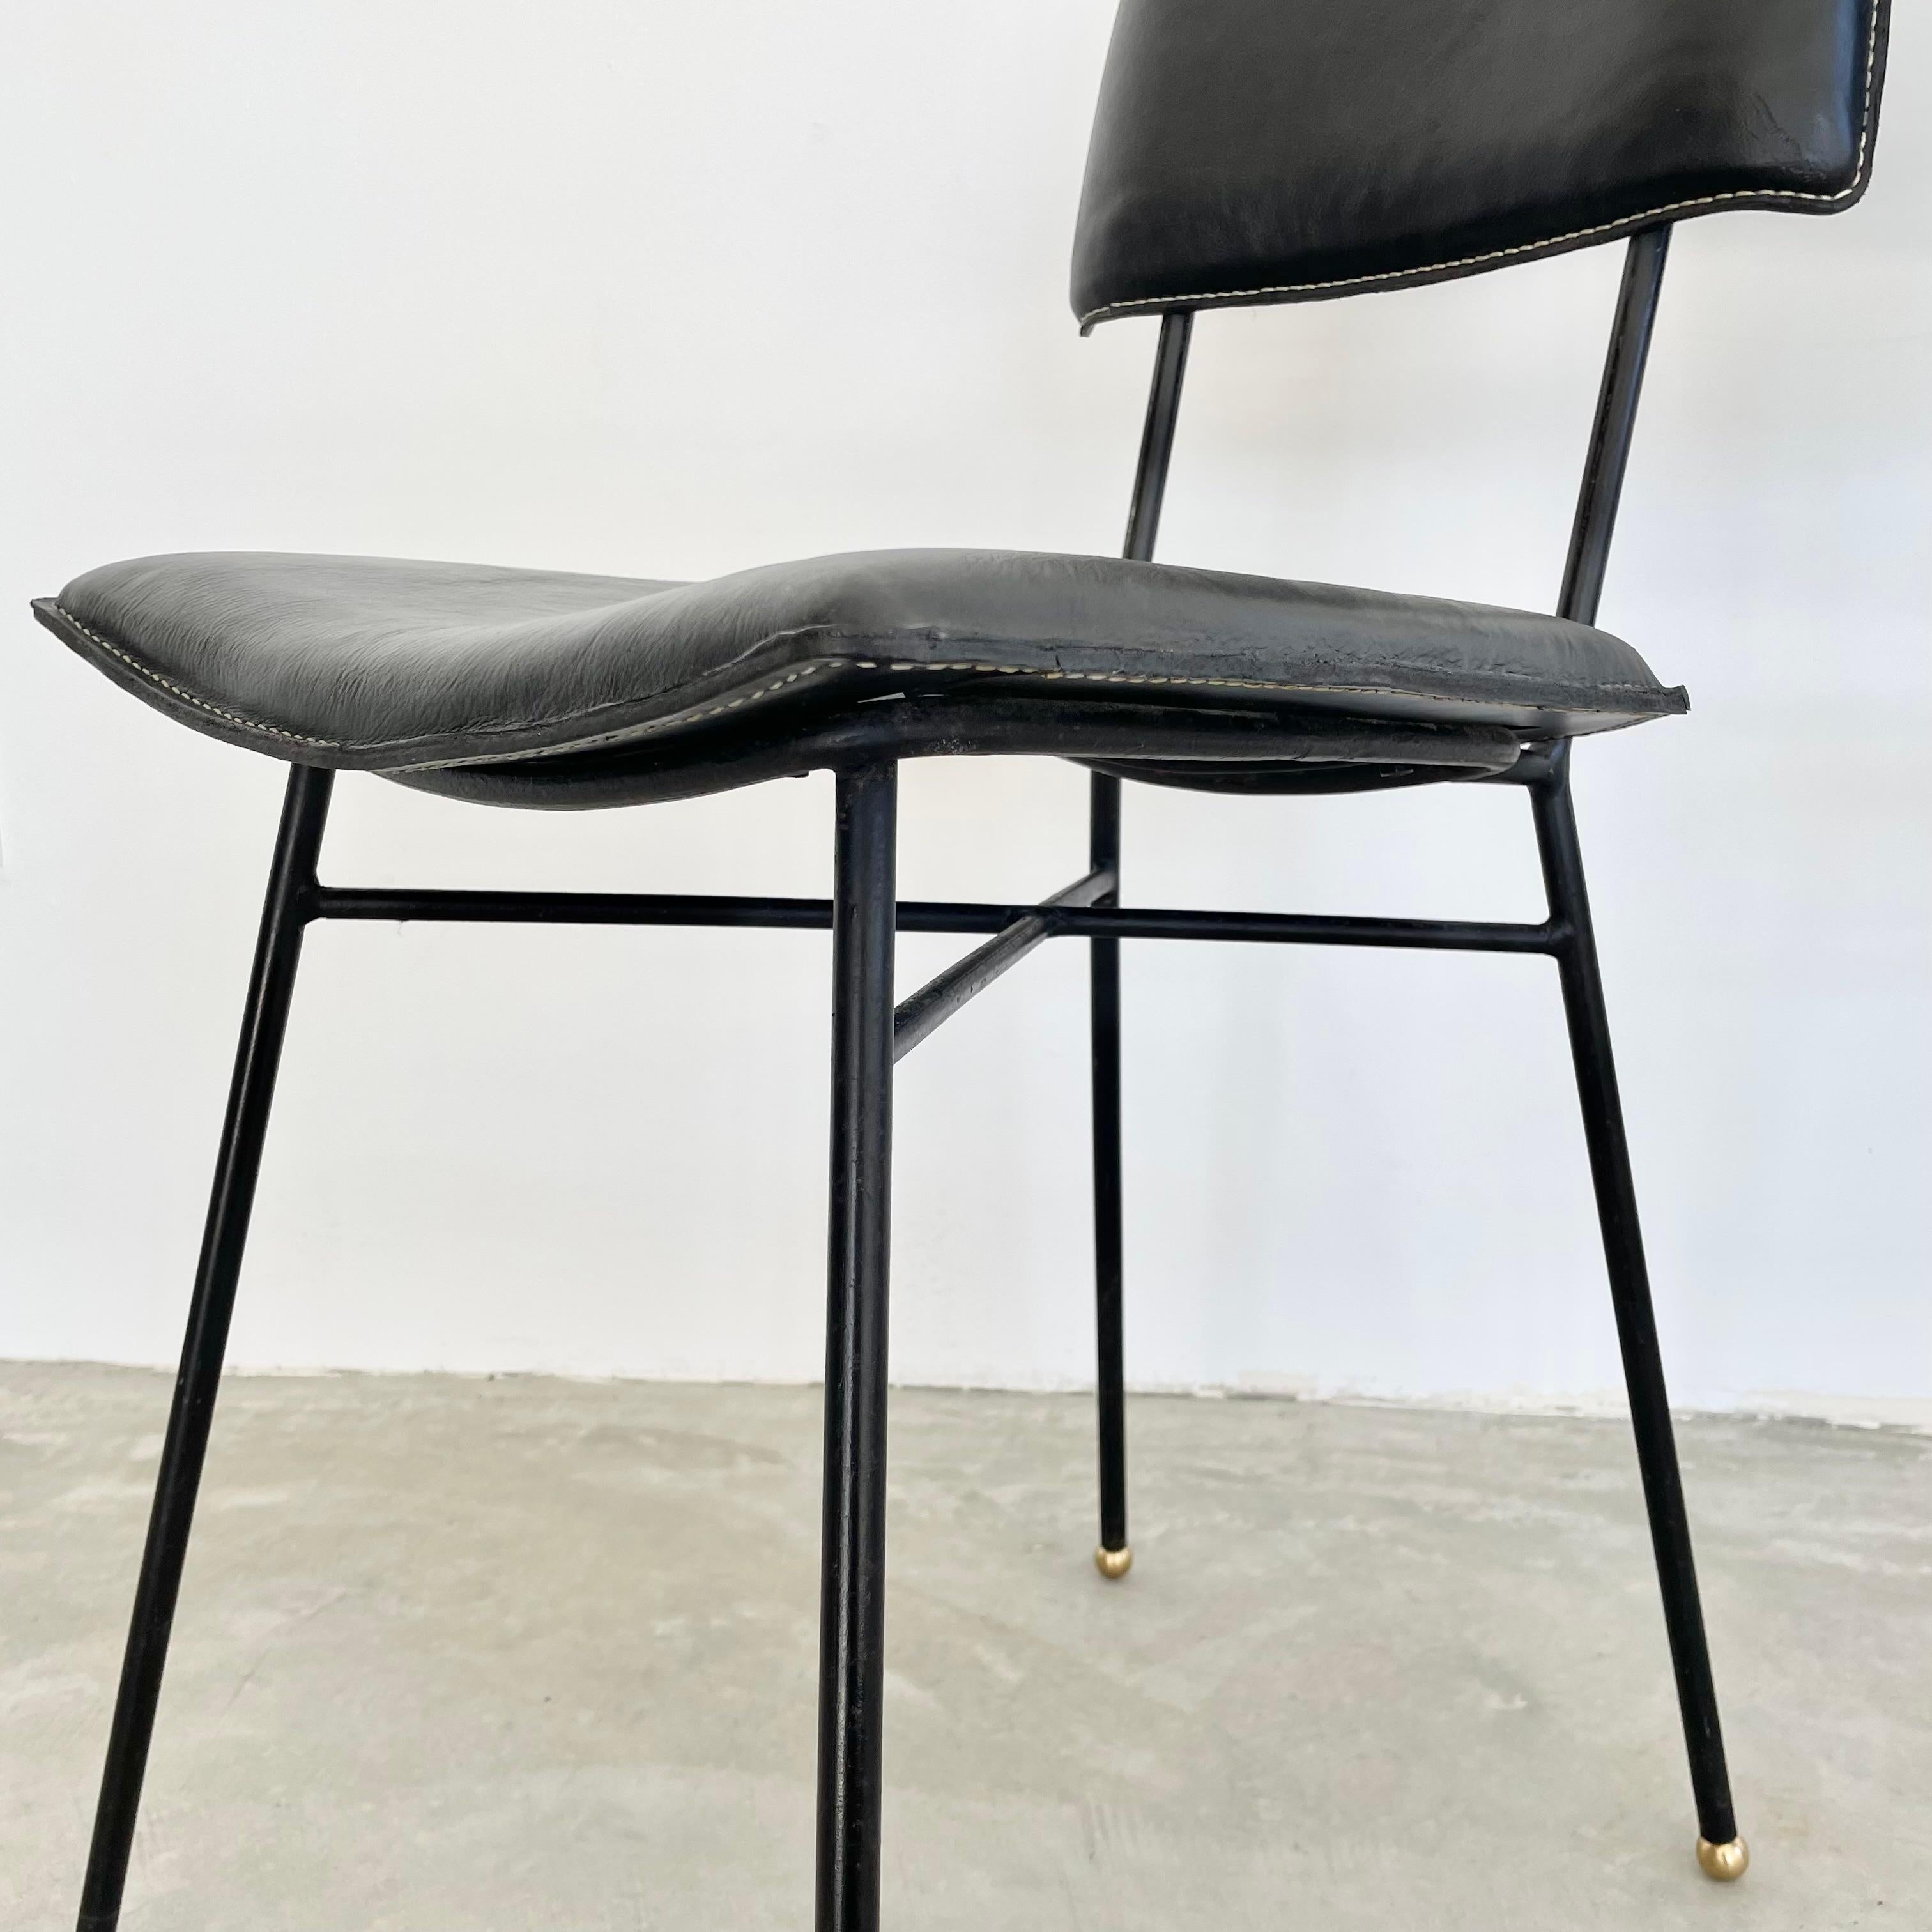 Jacques Adnet, Stuhl aus schwarzem Leder, 1950er-Jahre, Frankreich (Mitte des 20. Jahrhunderts) im Angebot